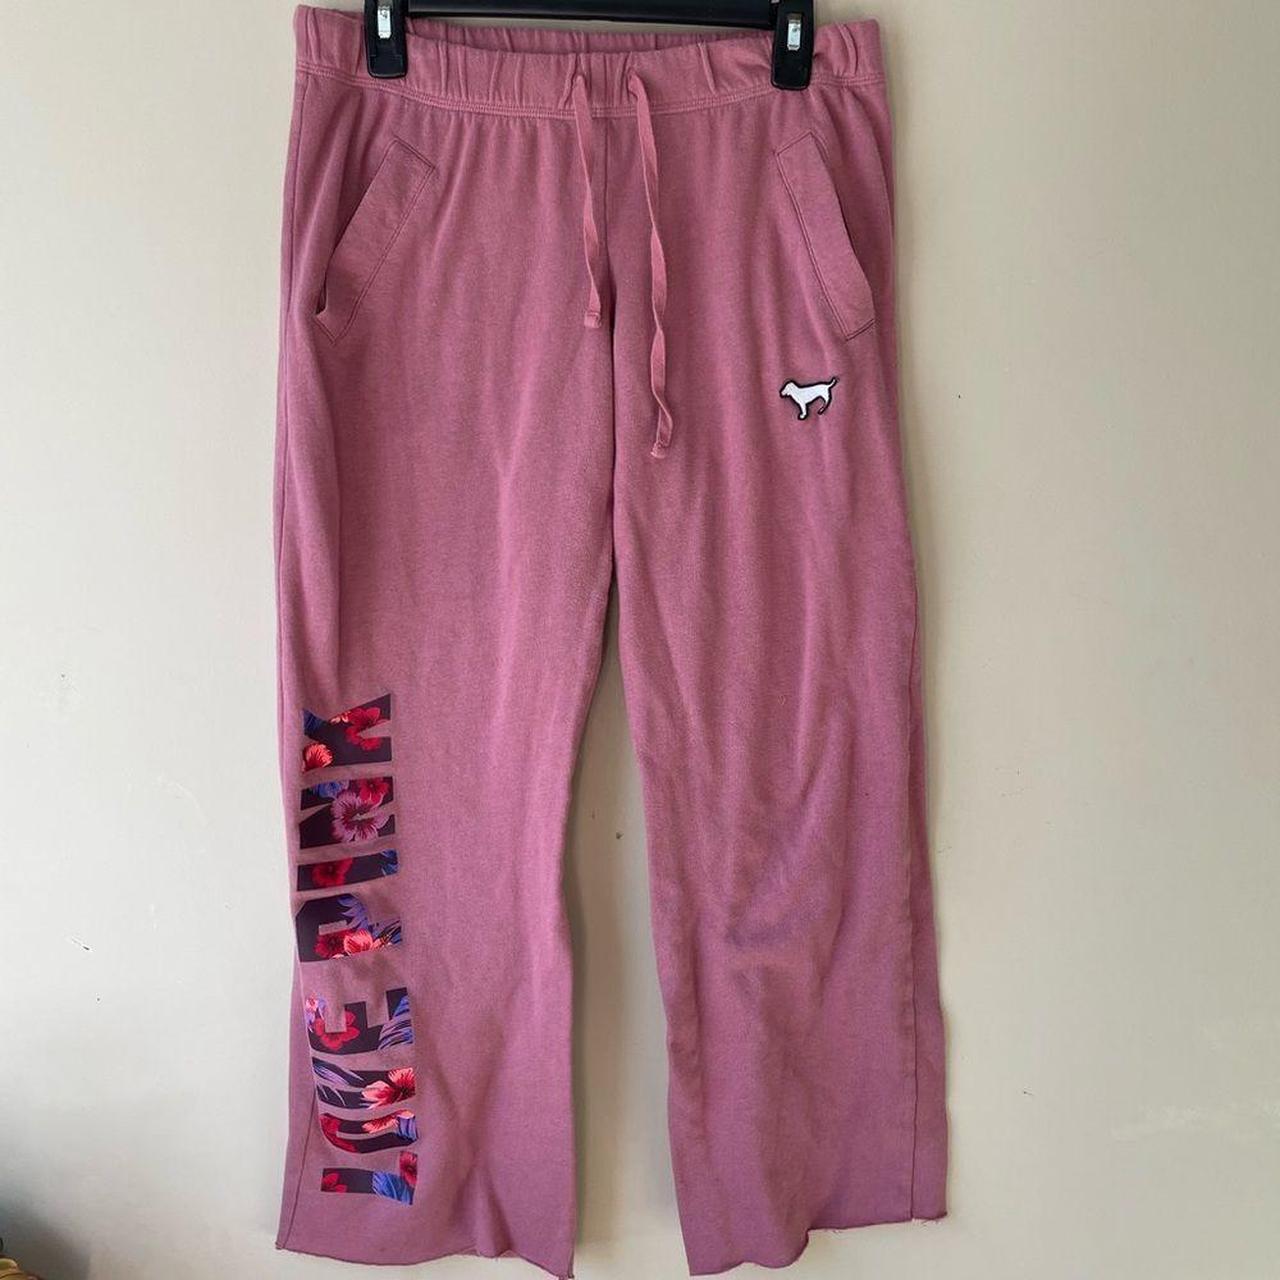 VS PINK hot pink sweat pants. Super super soft and - Depop